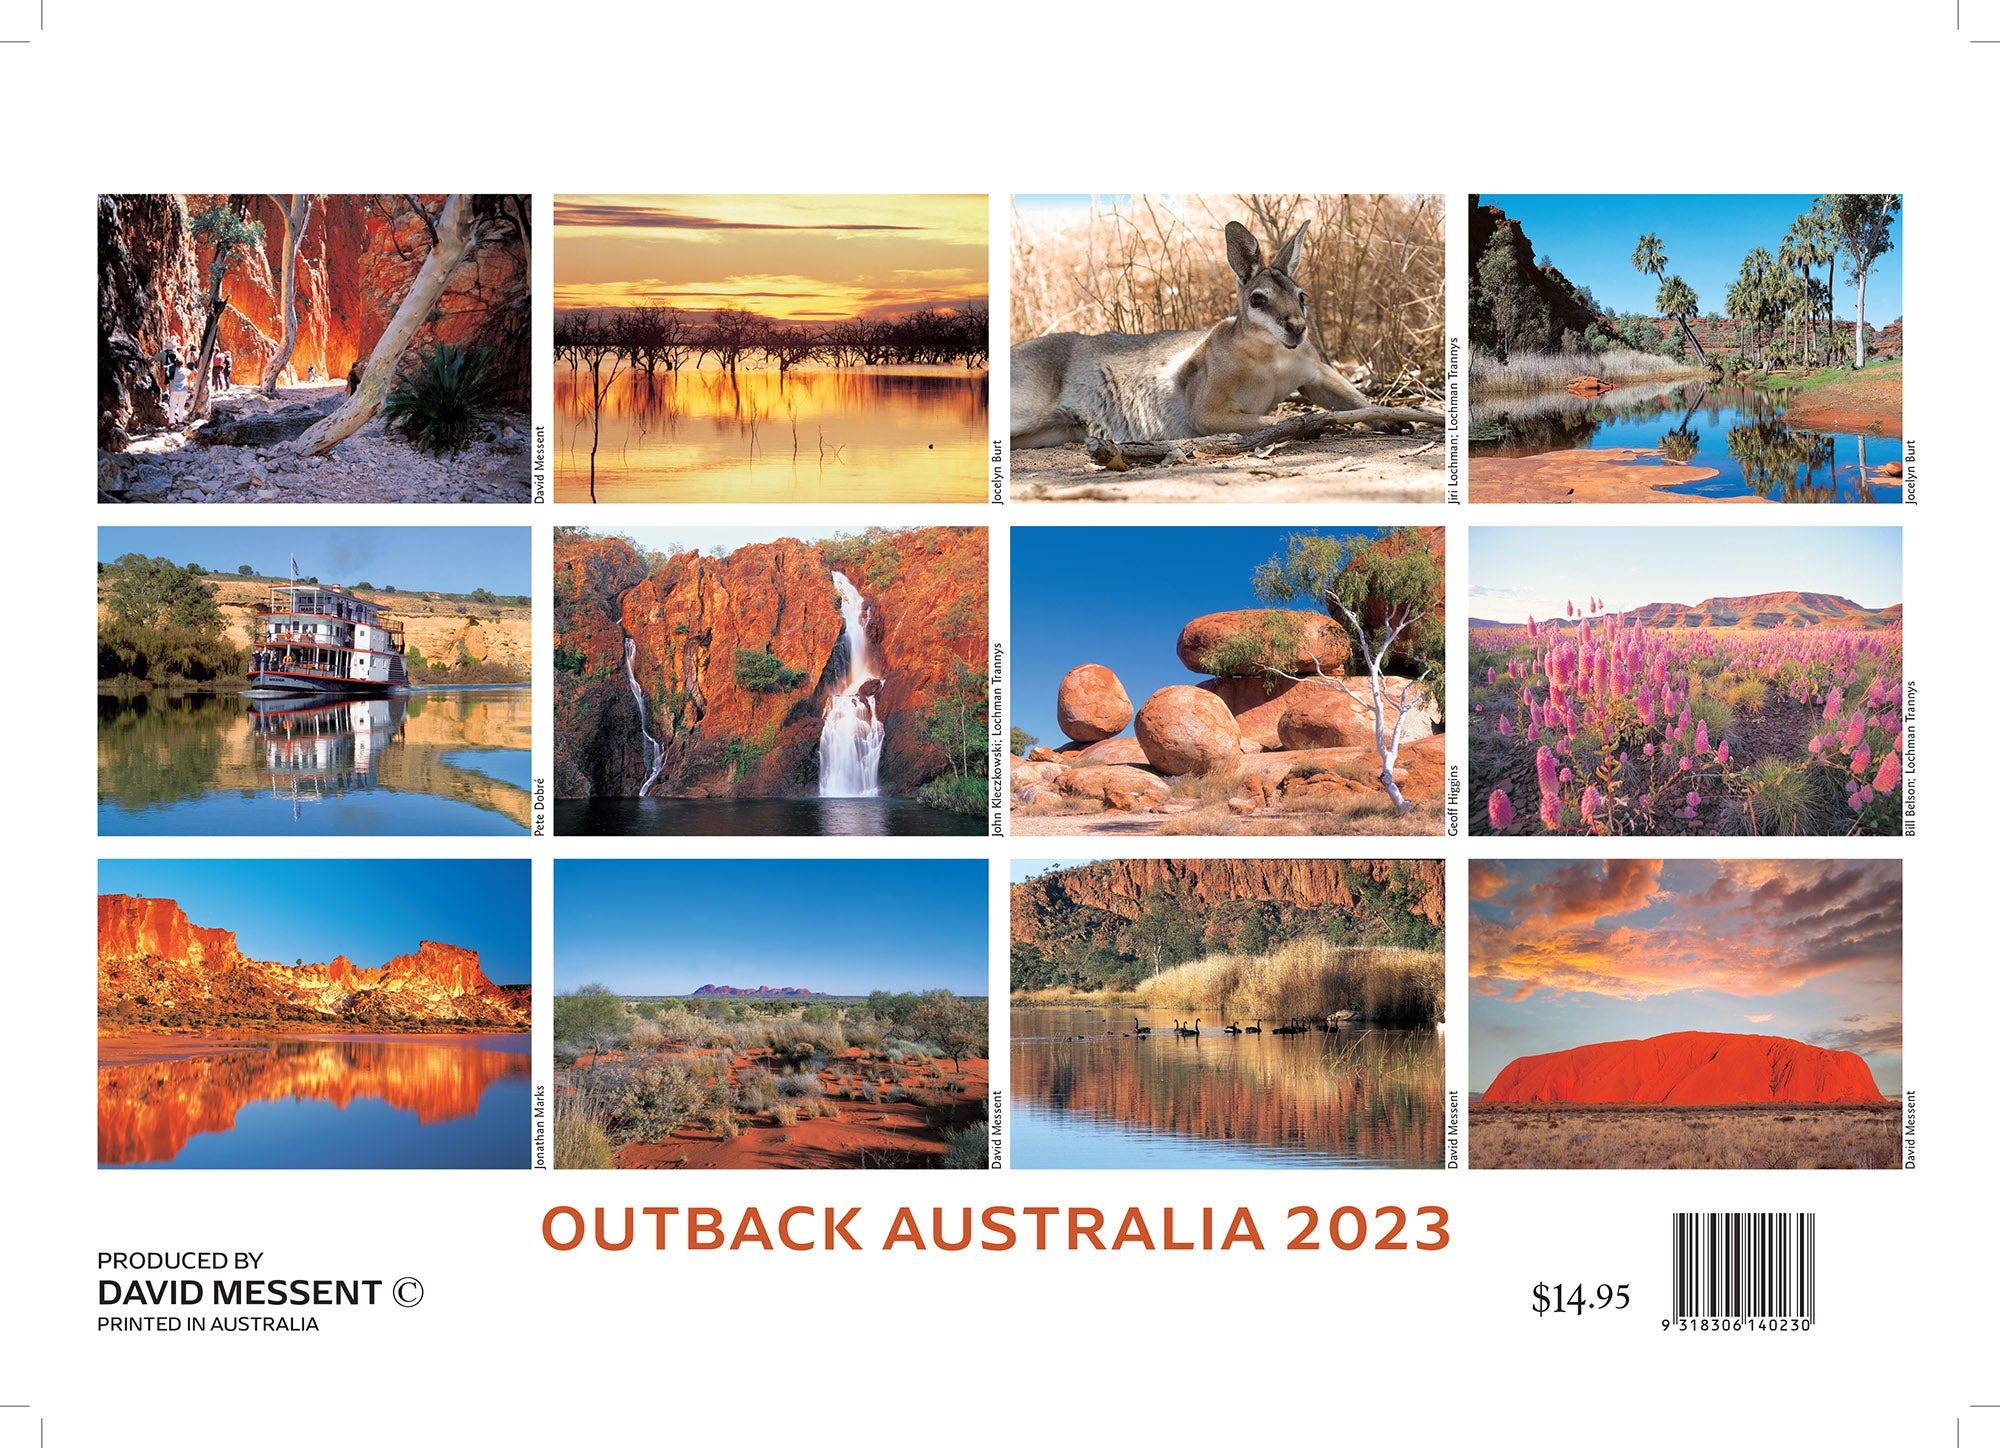 2023 Outback Australia by David Messent - Horizontal Wall Calendar